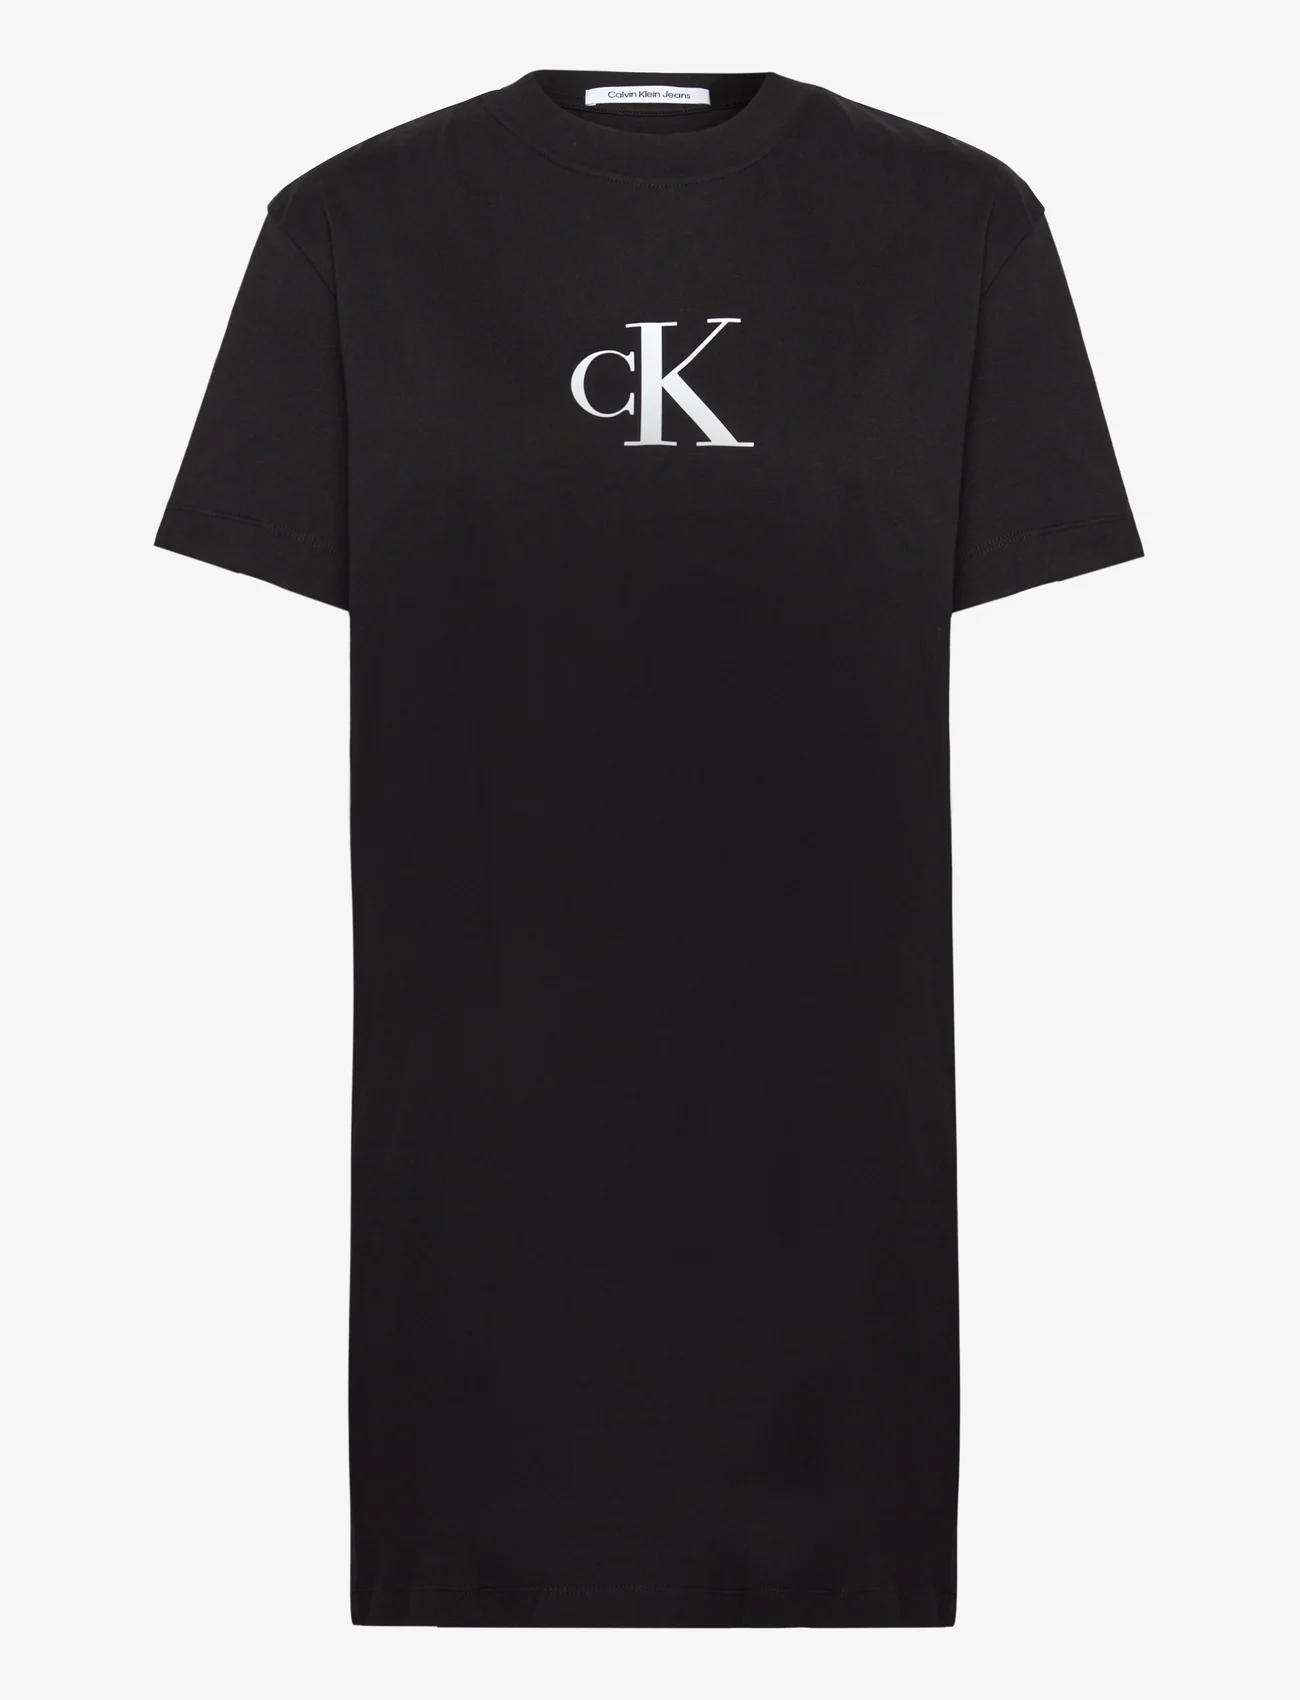 Calvin Klein Jeans - SATIN CK T-SHIRT DRESS - t-shirtkjoler - ck black - 0